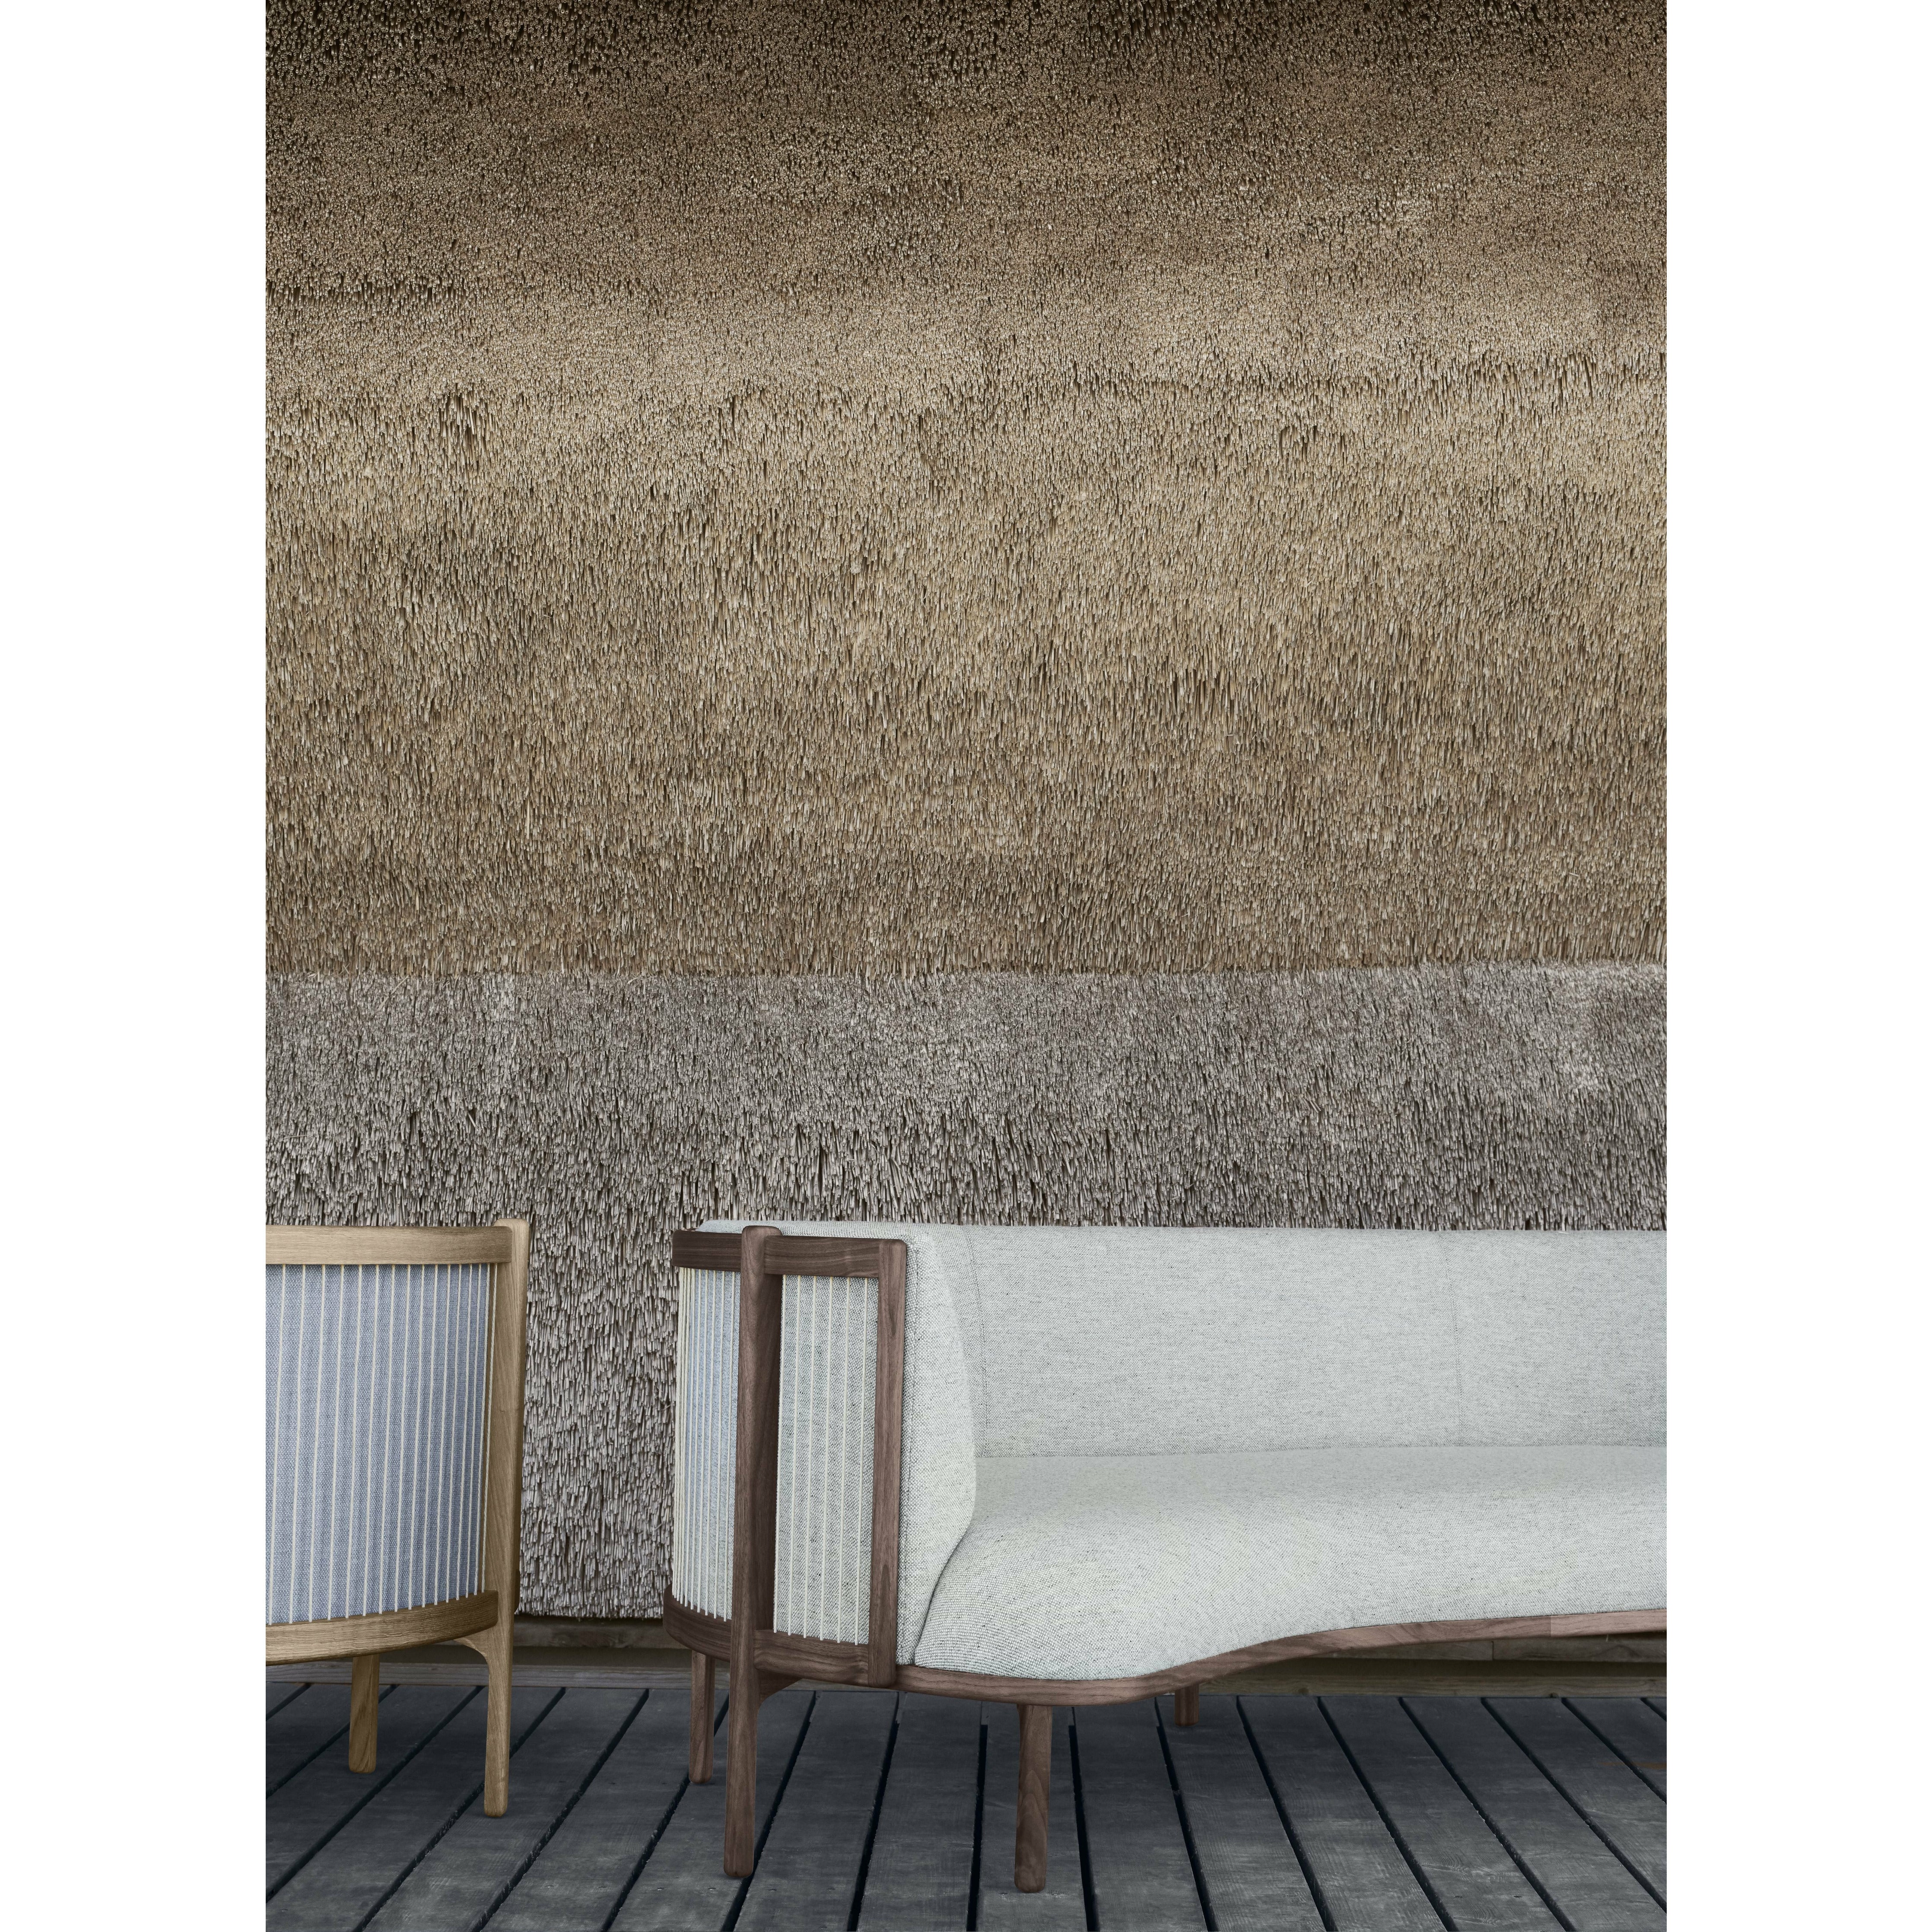 Carl Hansen Rf1903 L Sidevays Sofa 3 Seeater Left Oak Oak Oil/Fiord Fabric, Pink/Natural Brown